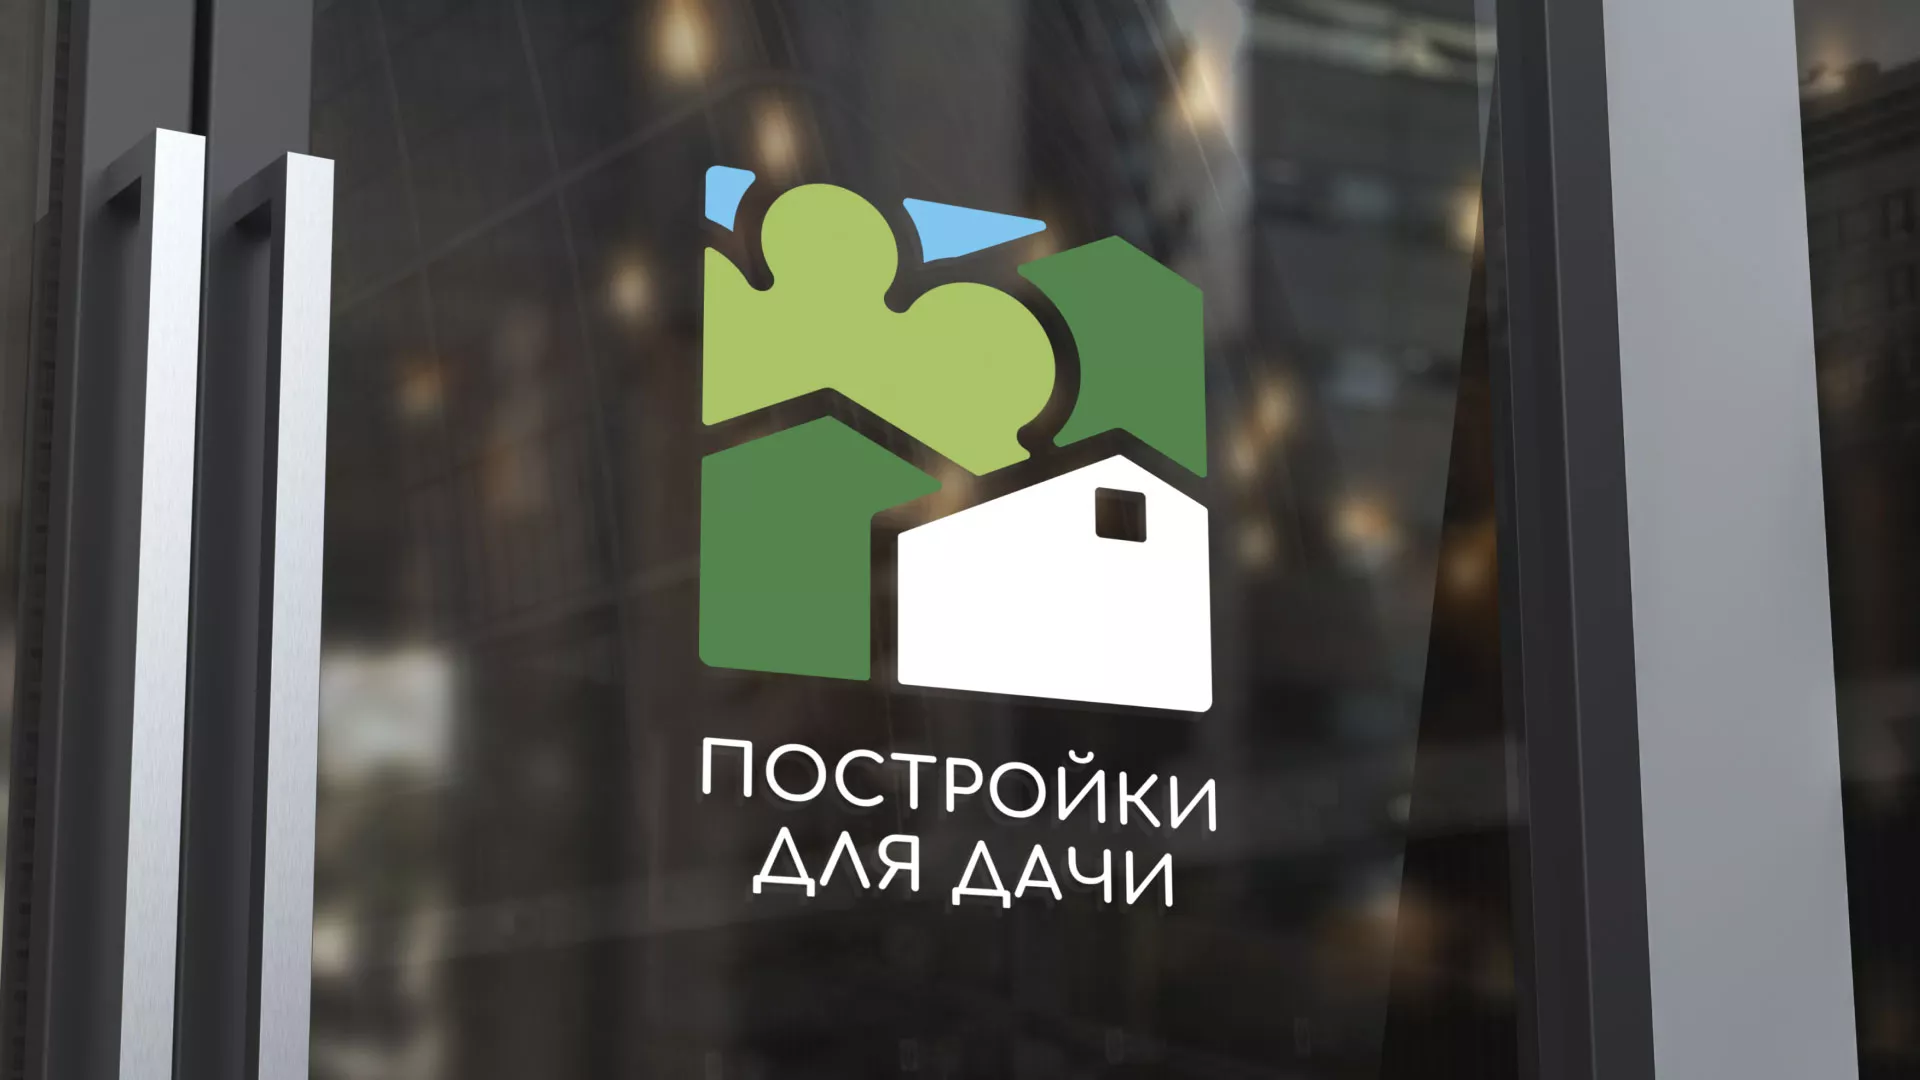 Разработка логотипа в Усмани для компании «Постройки для дачи»